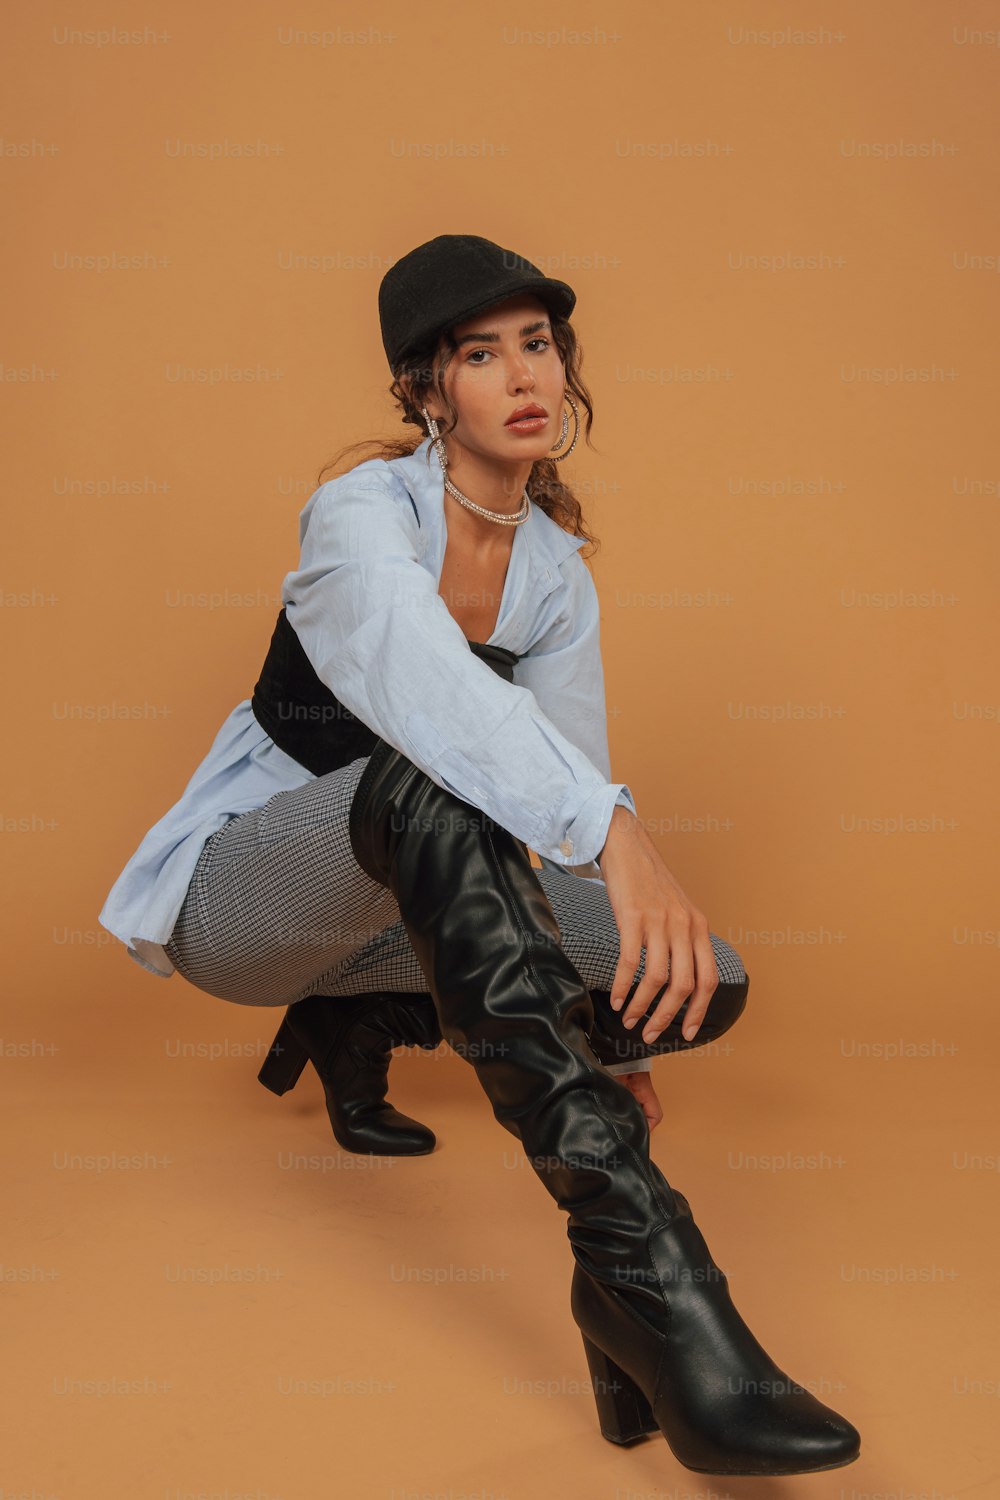 Una donna seduta a terra che indossa stivali neri